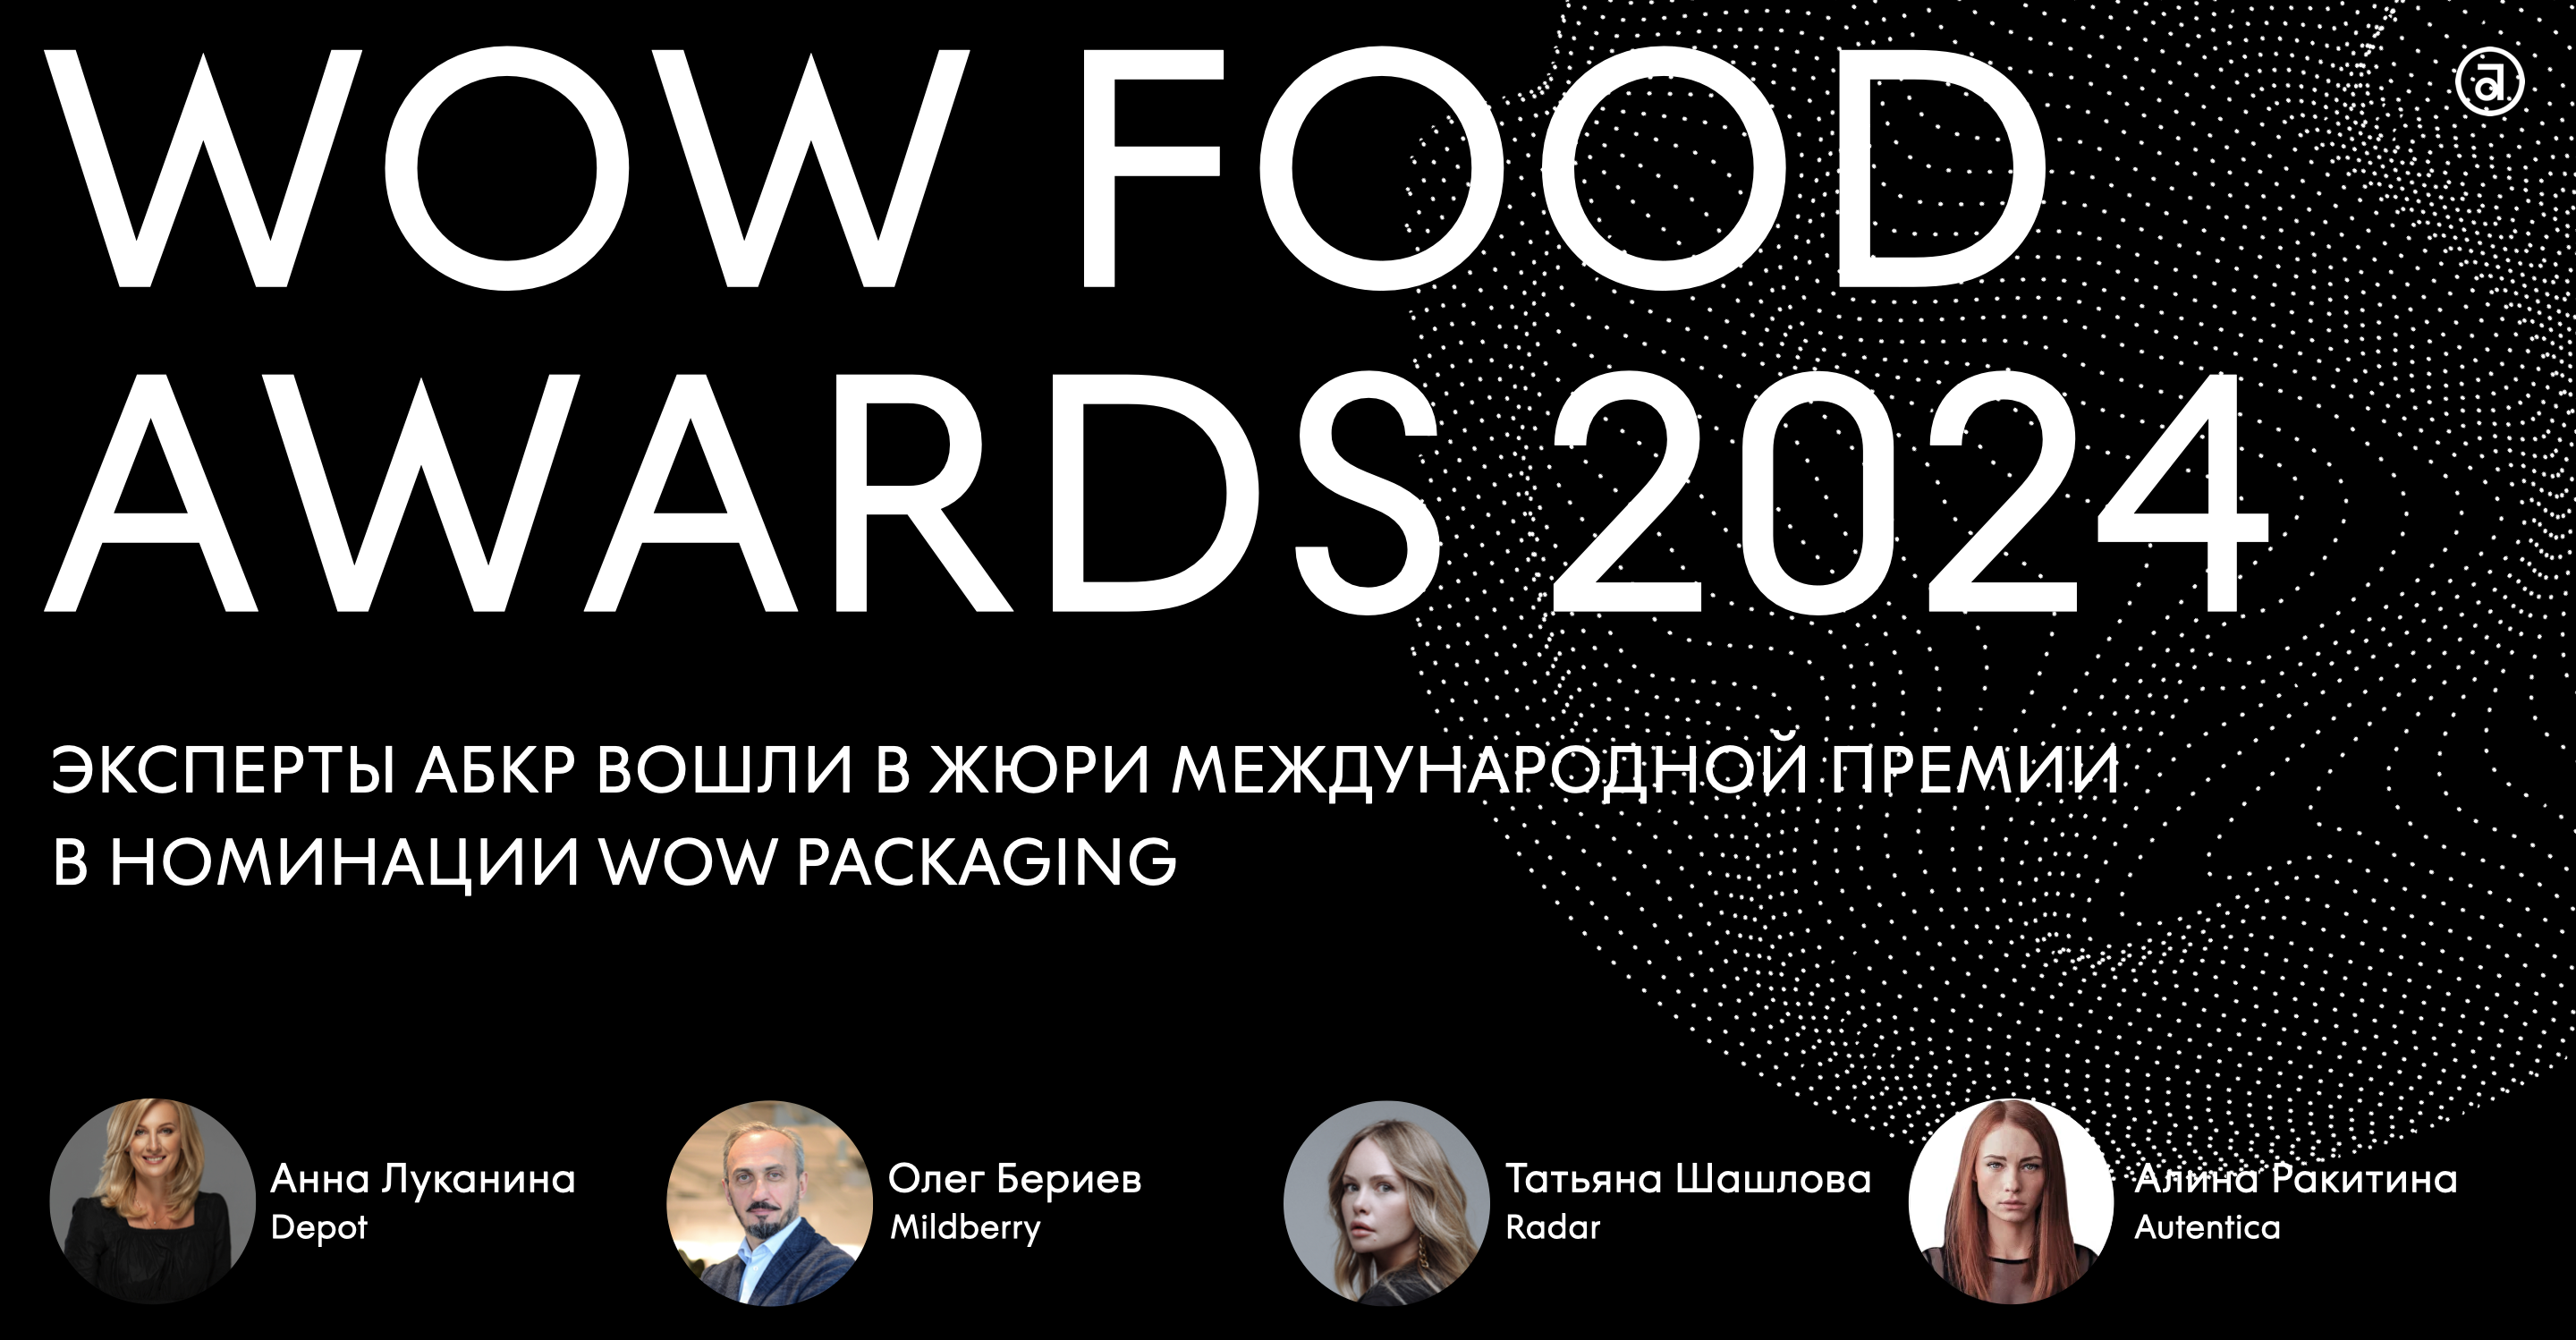       FBIF Wow Food Awards